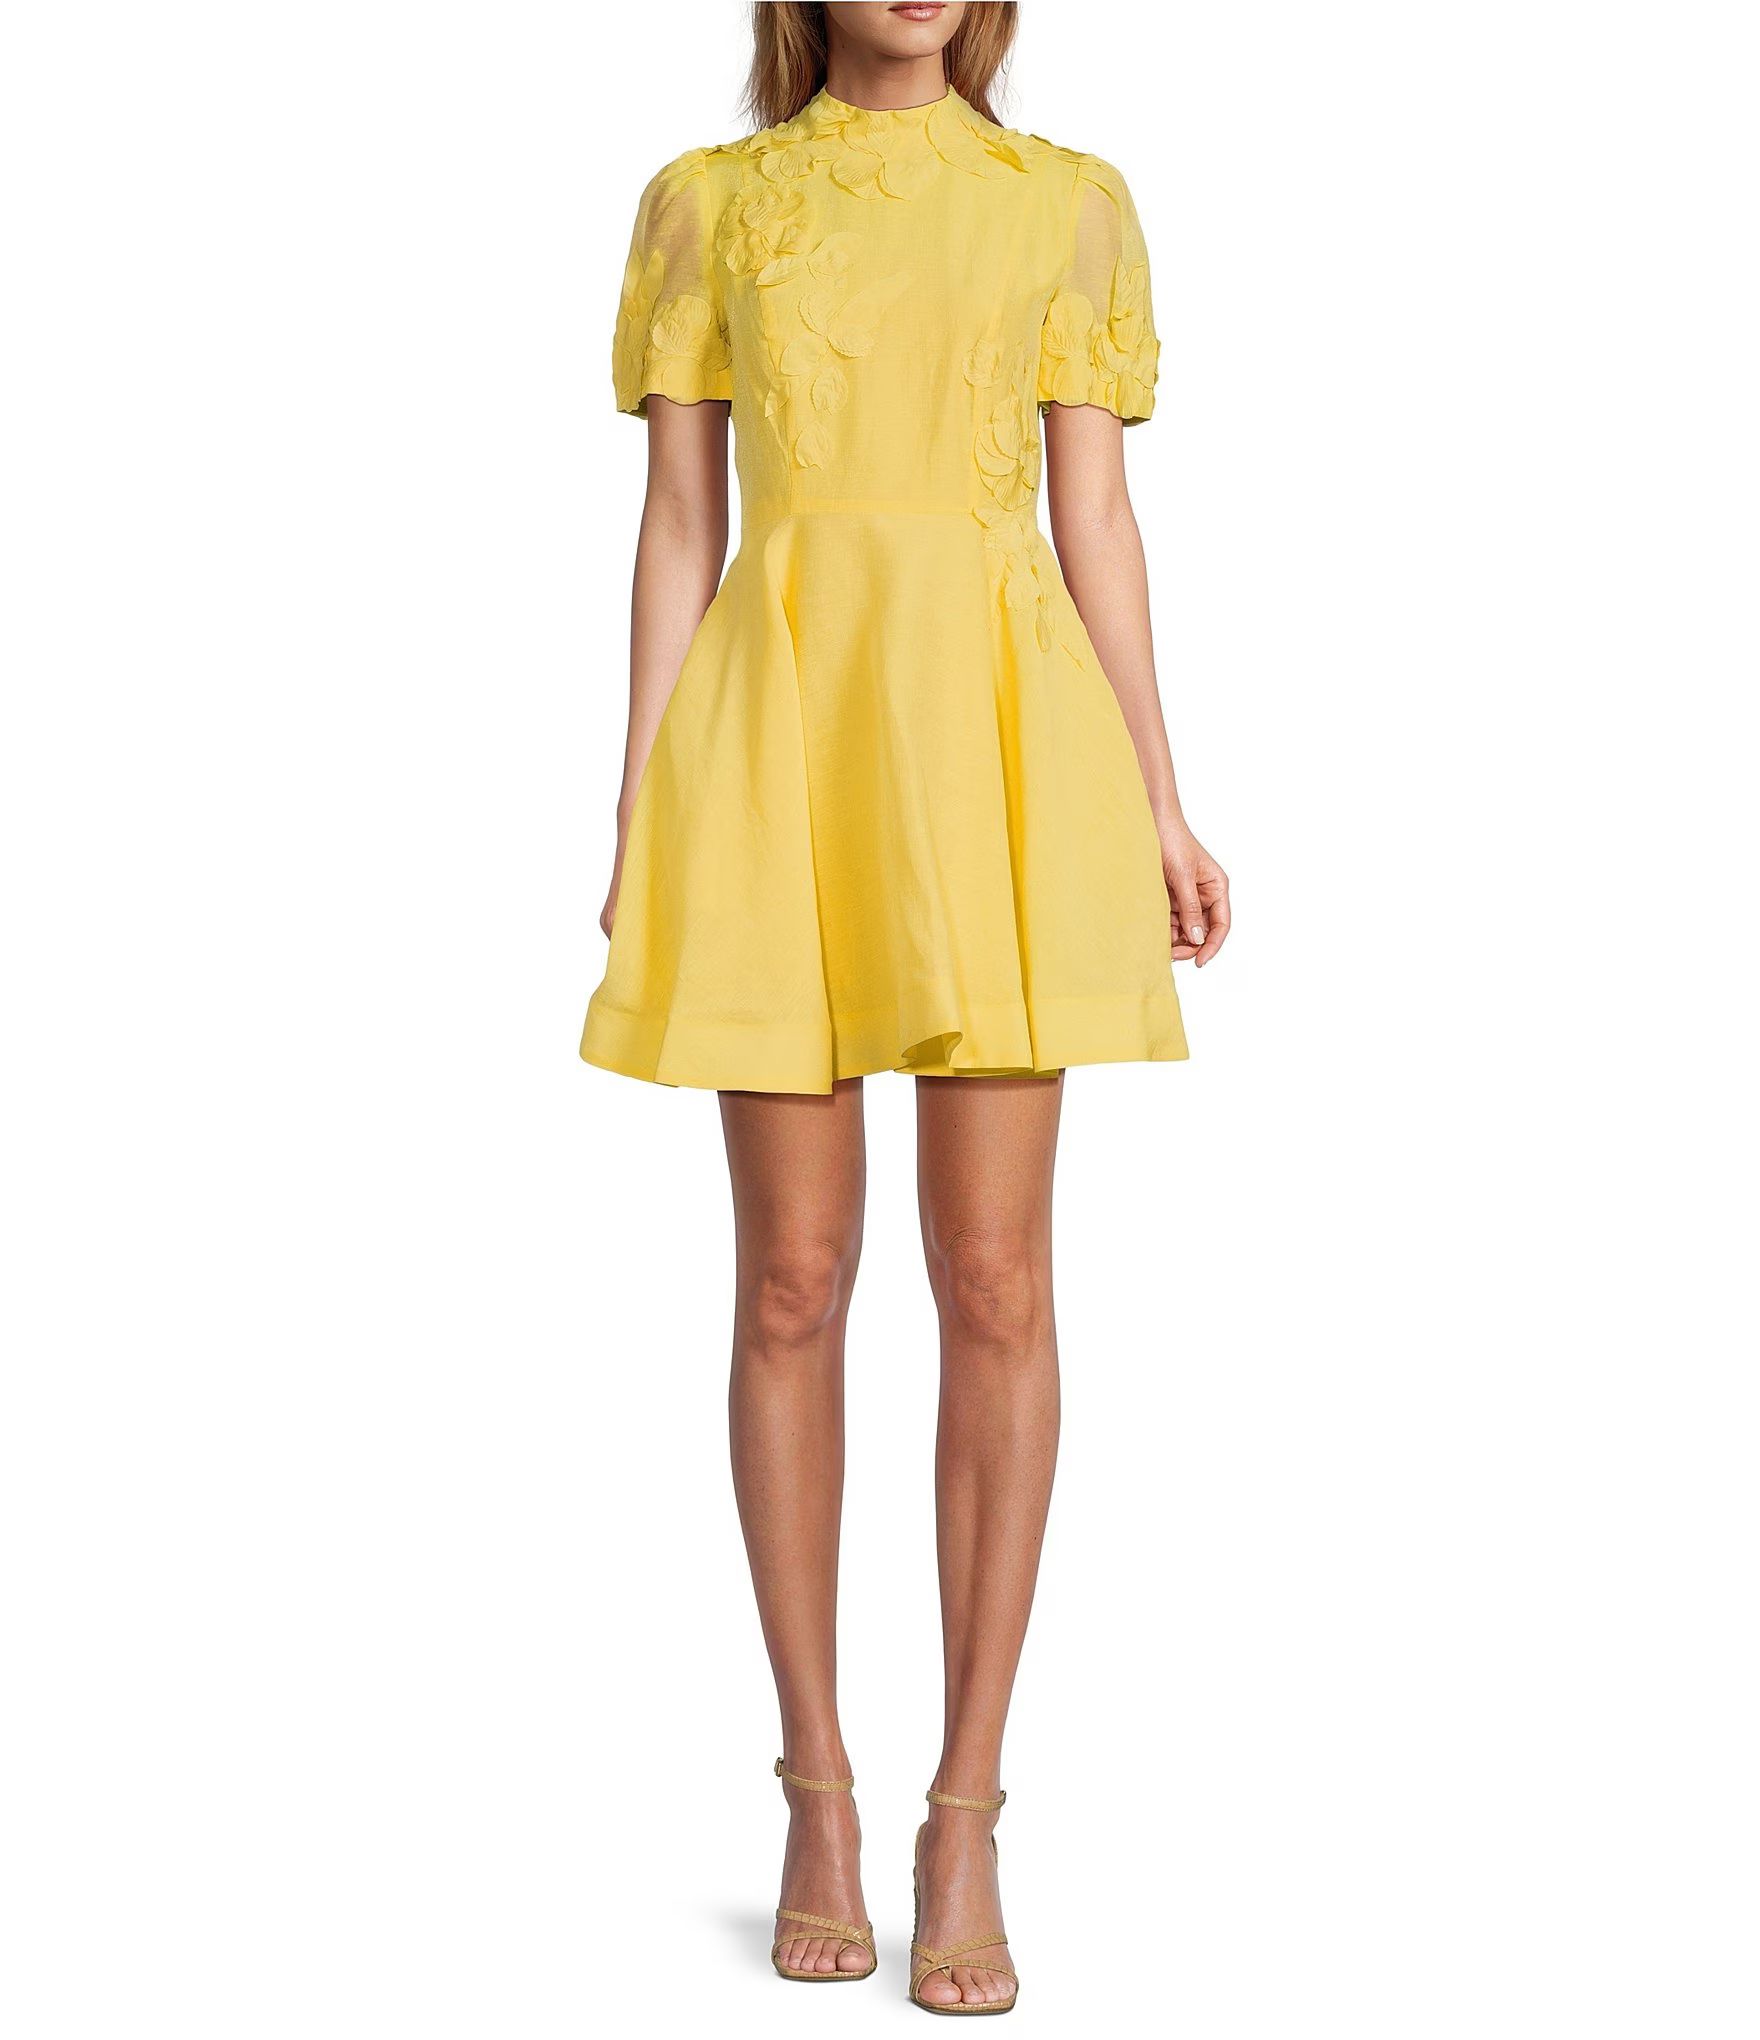 Willow Floral Applique Mock Neck Short Sleeve Midi Dress | Dillard's